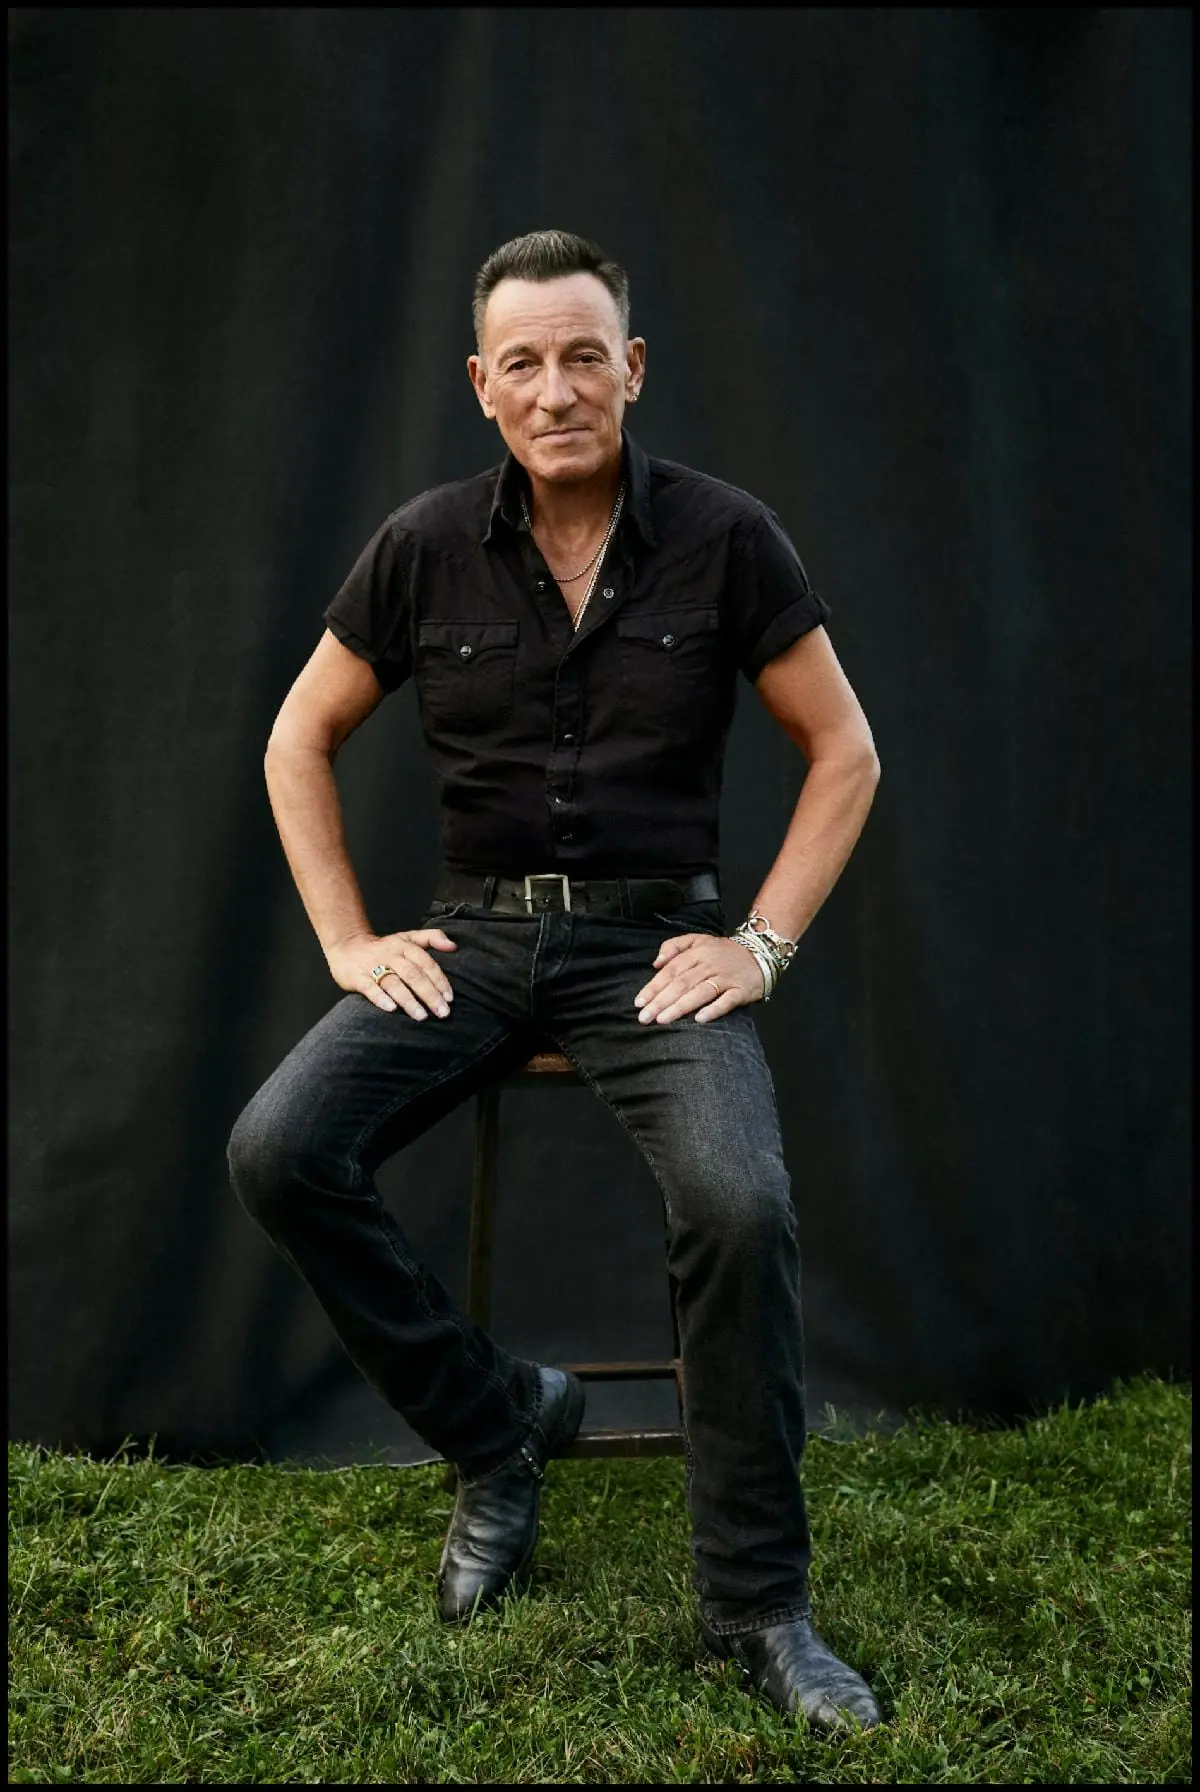 Watch Now: Bruce Springsteen Sings “My Hometown” at Irish Pub Ahead of Dublin Run